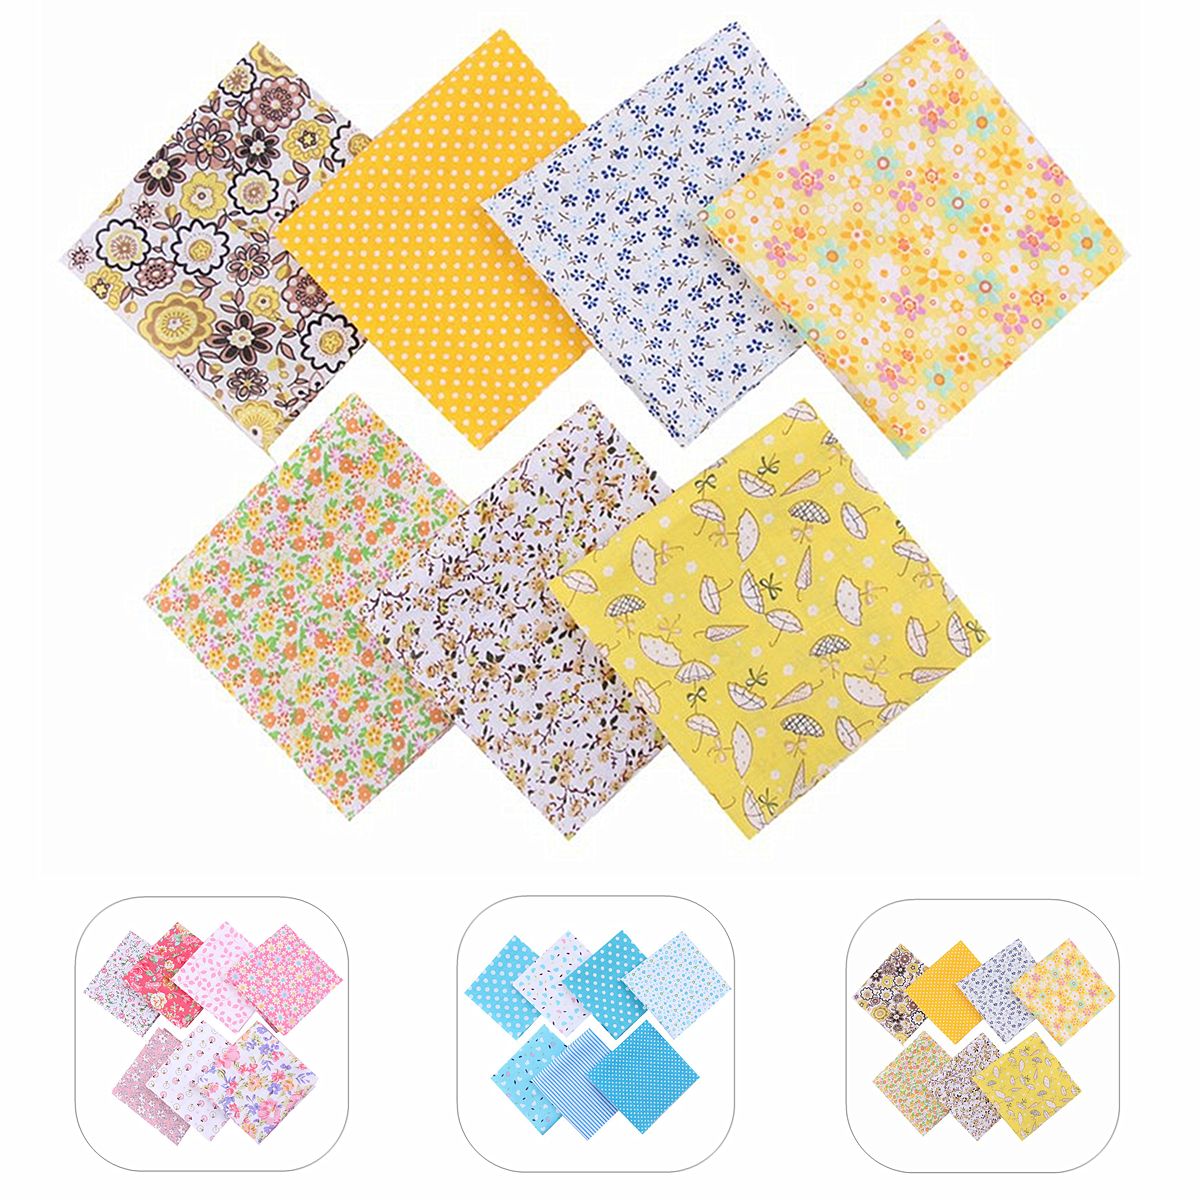 DIY-7PCS-Quilting-Bundle-Patchwork-Cotton-Fabric-Handmade-Sewing-Crafts-Floral-1691620